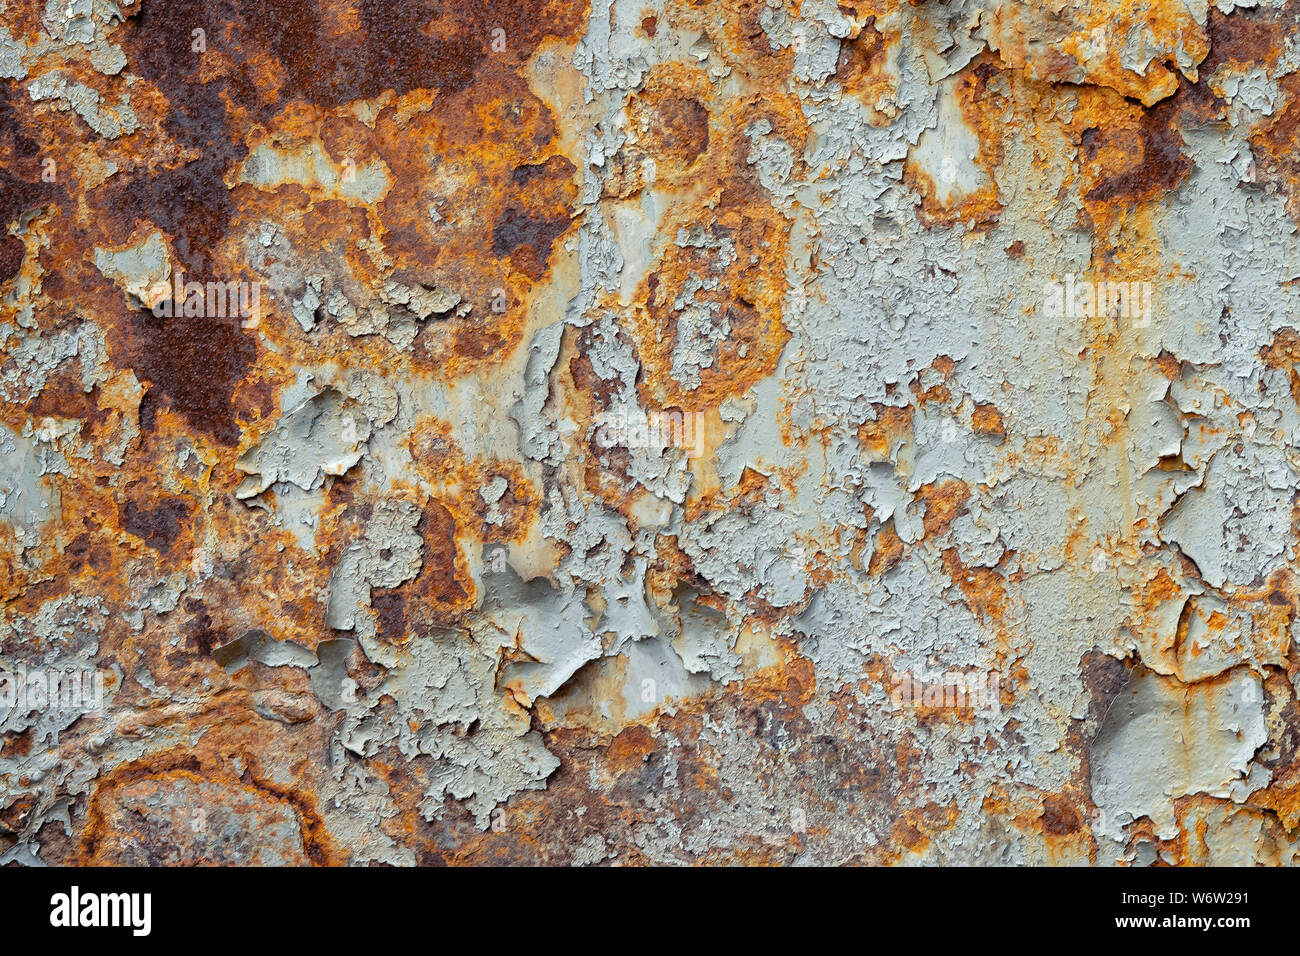 Textura de metal oxidado fotografías e imágenes de alta resolución - Alamy